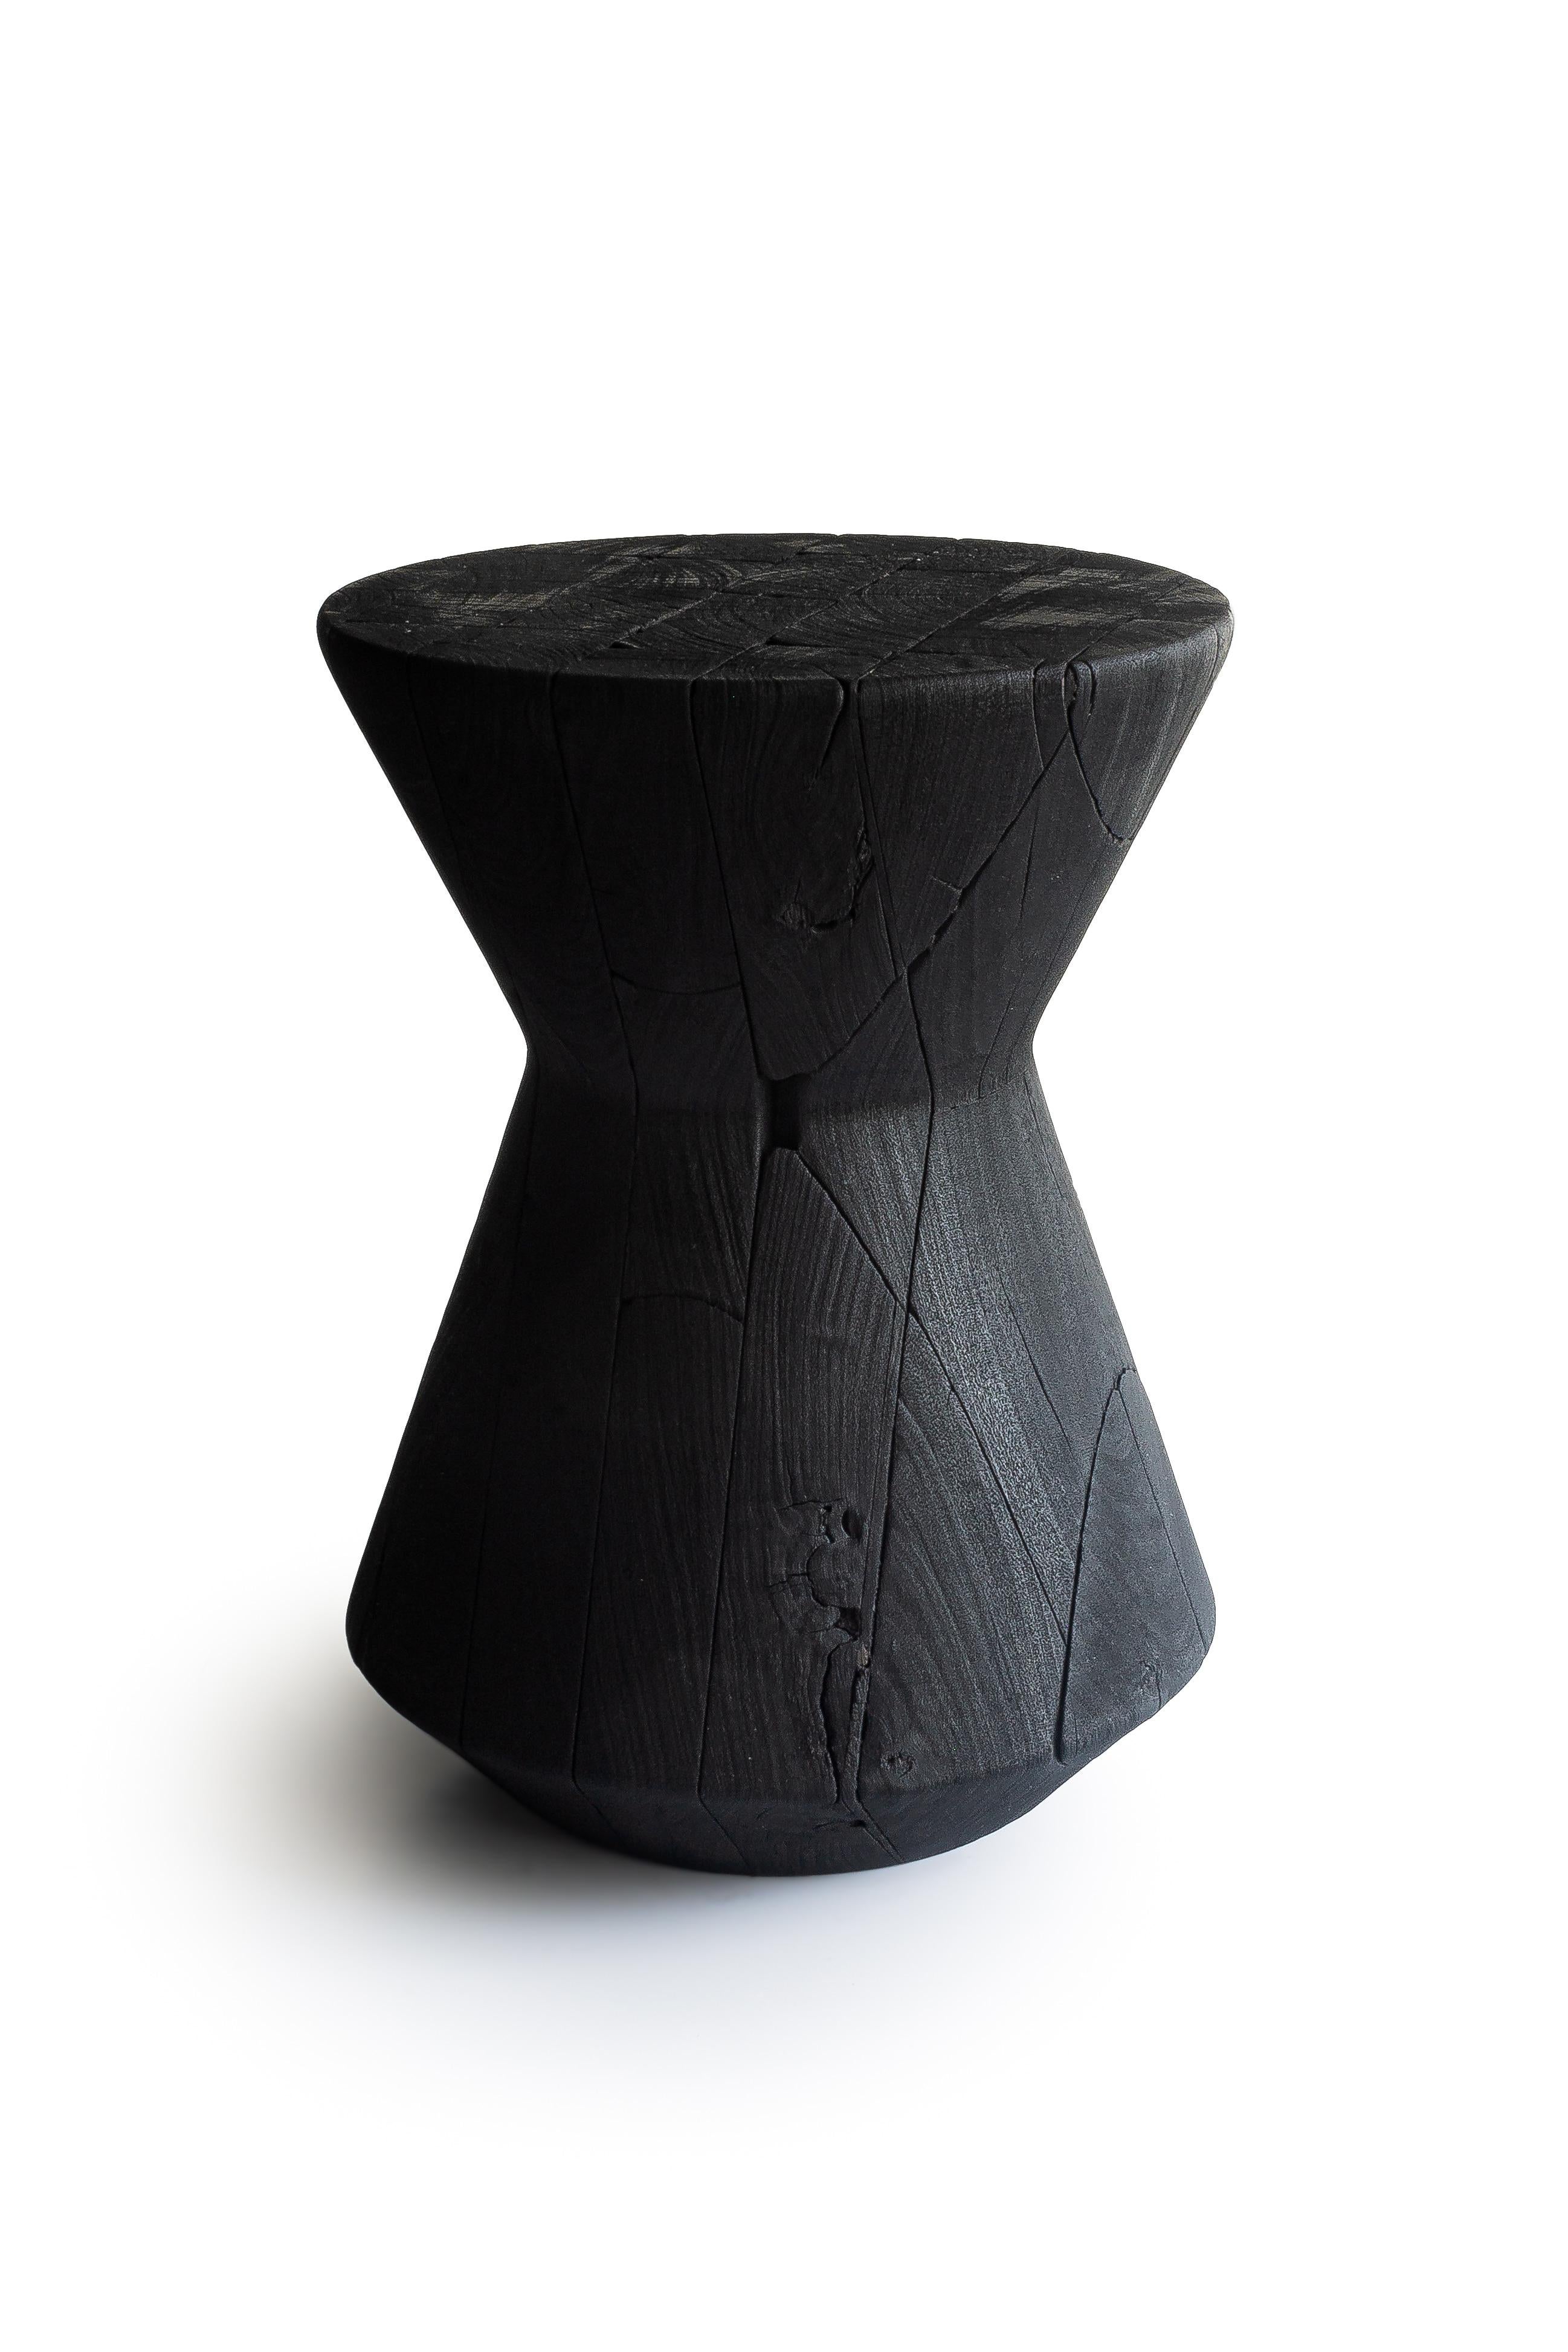 Organic Modern Contemporary Stool 'Yakisugi' by Carmworks, Burnt Wood For Sale